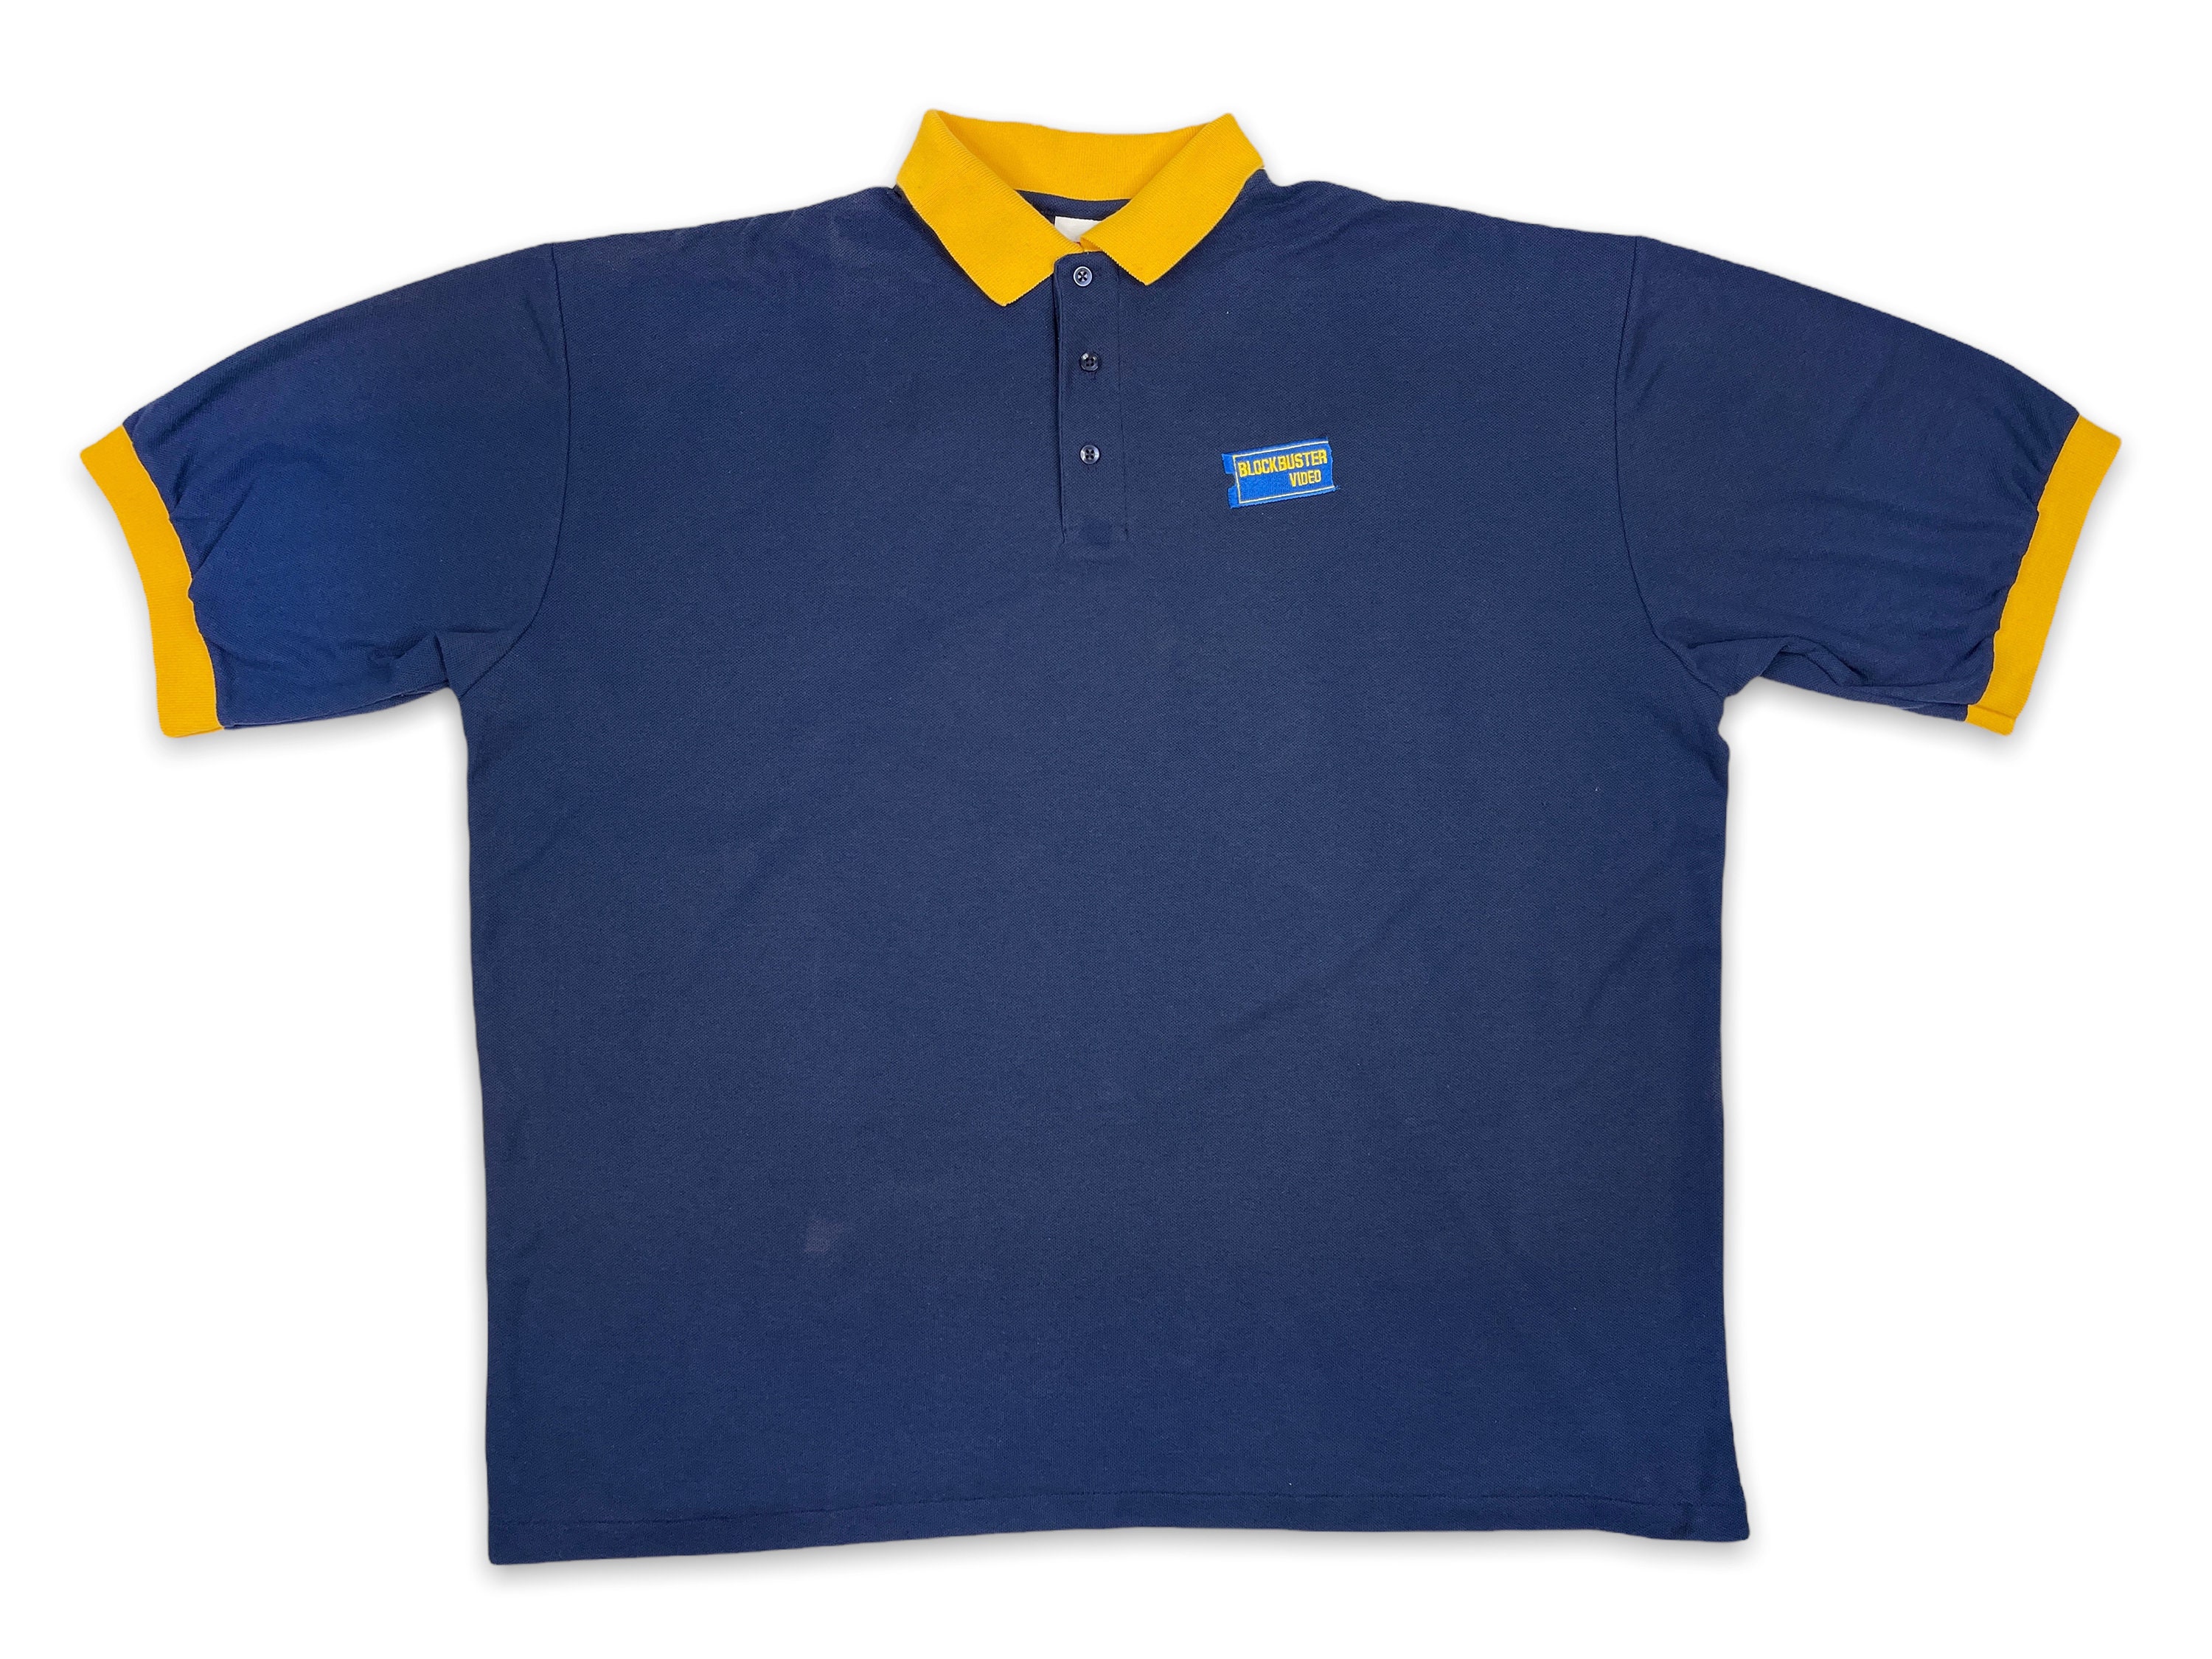 Vintage Blockbuster Polo Shirt Employee Uniform 90s Be Kind Rewind ...